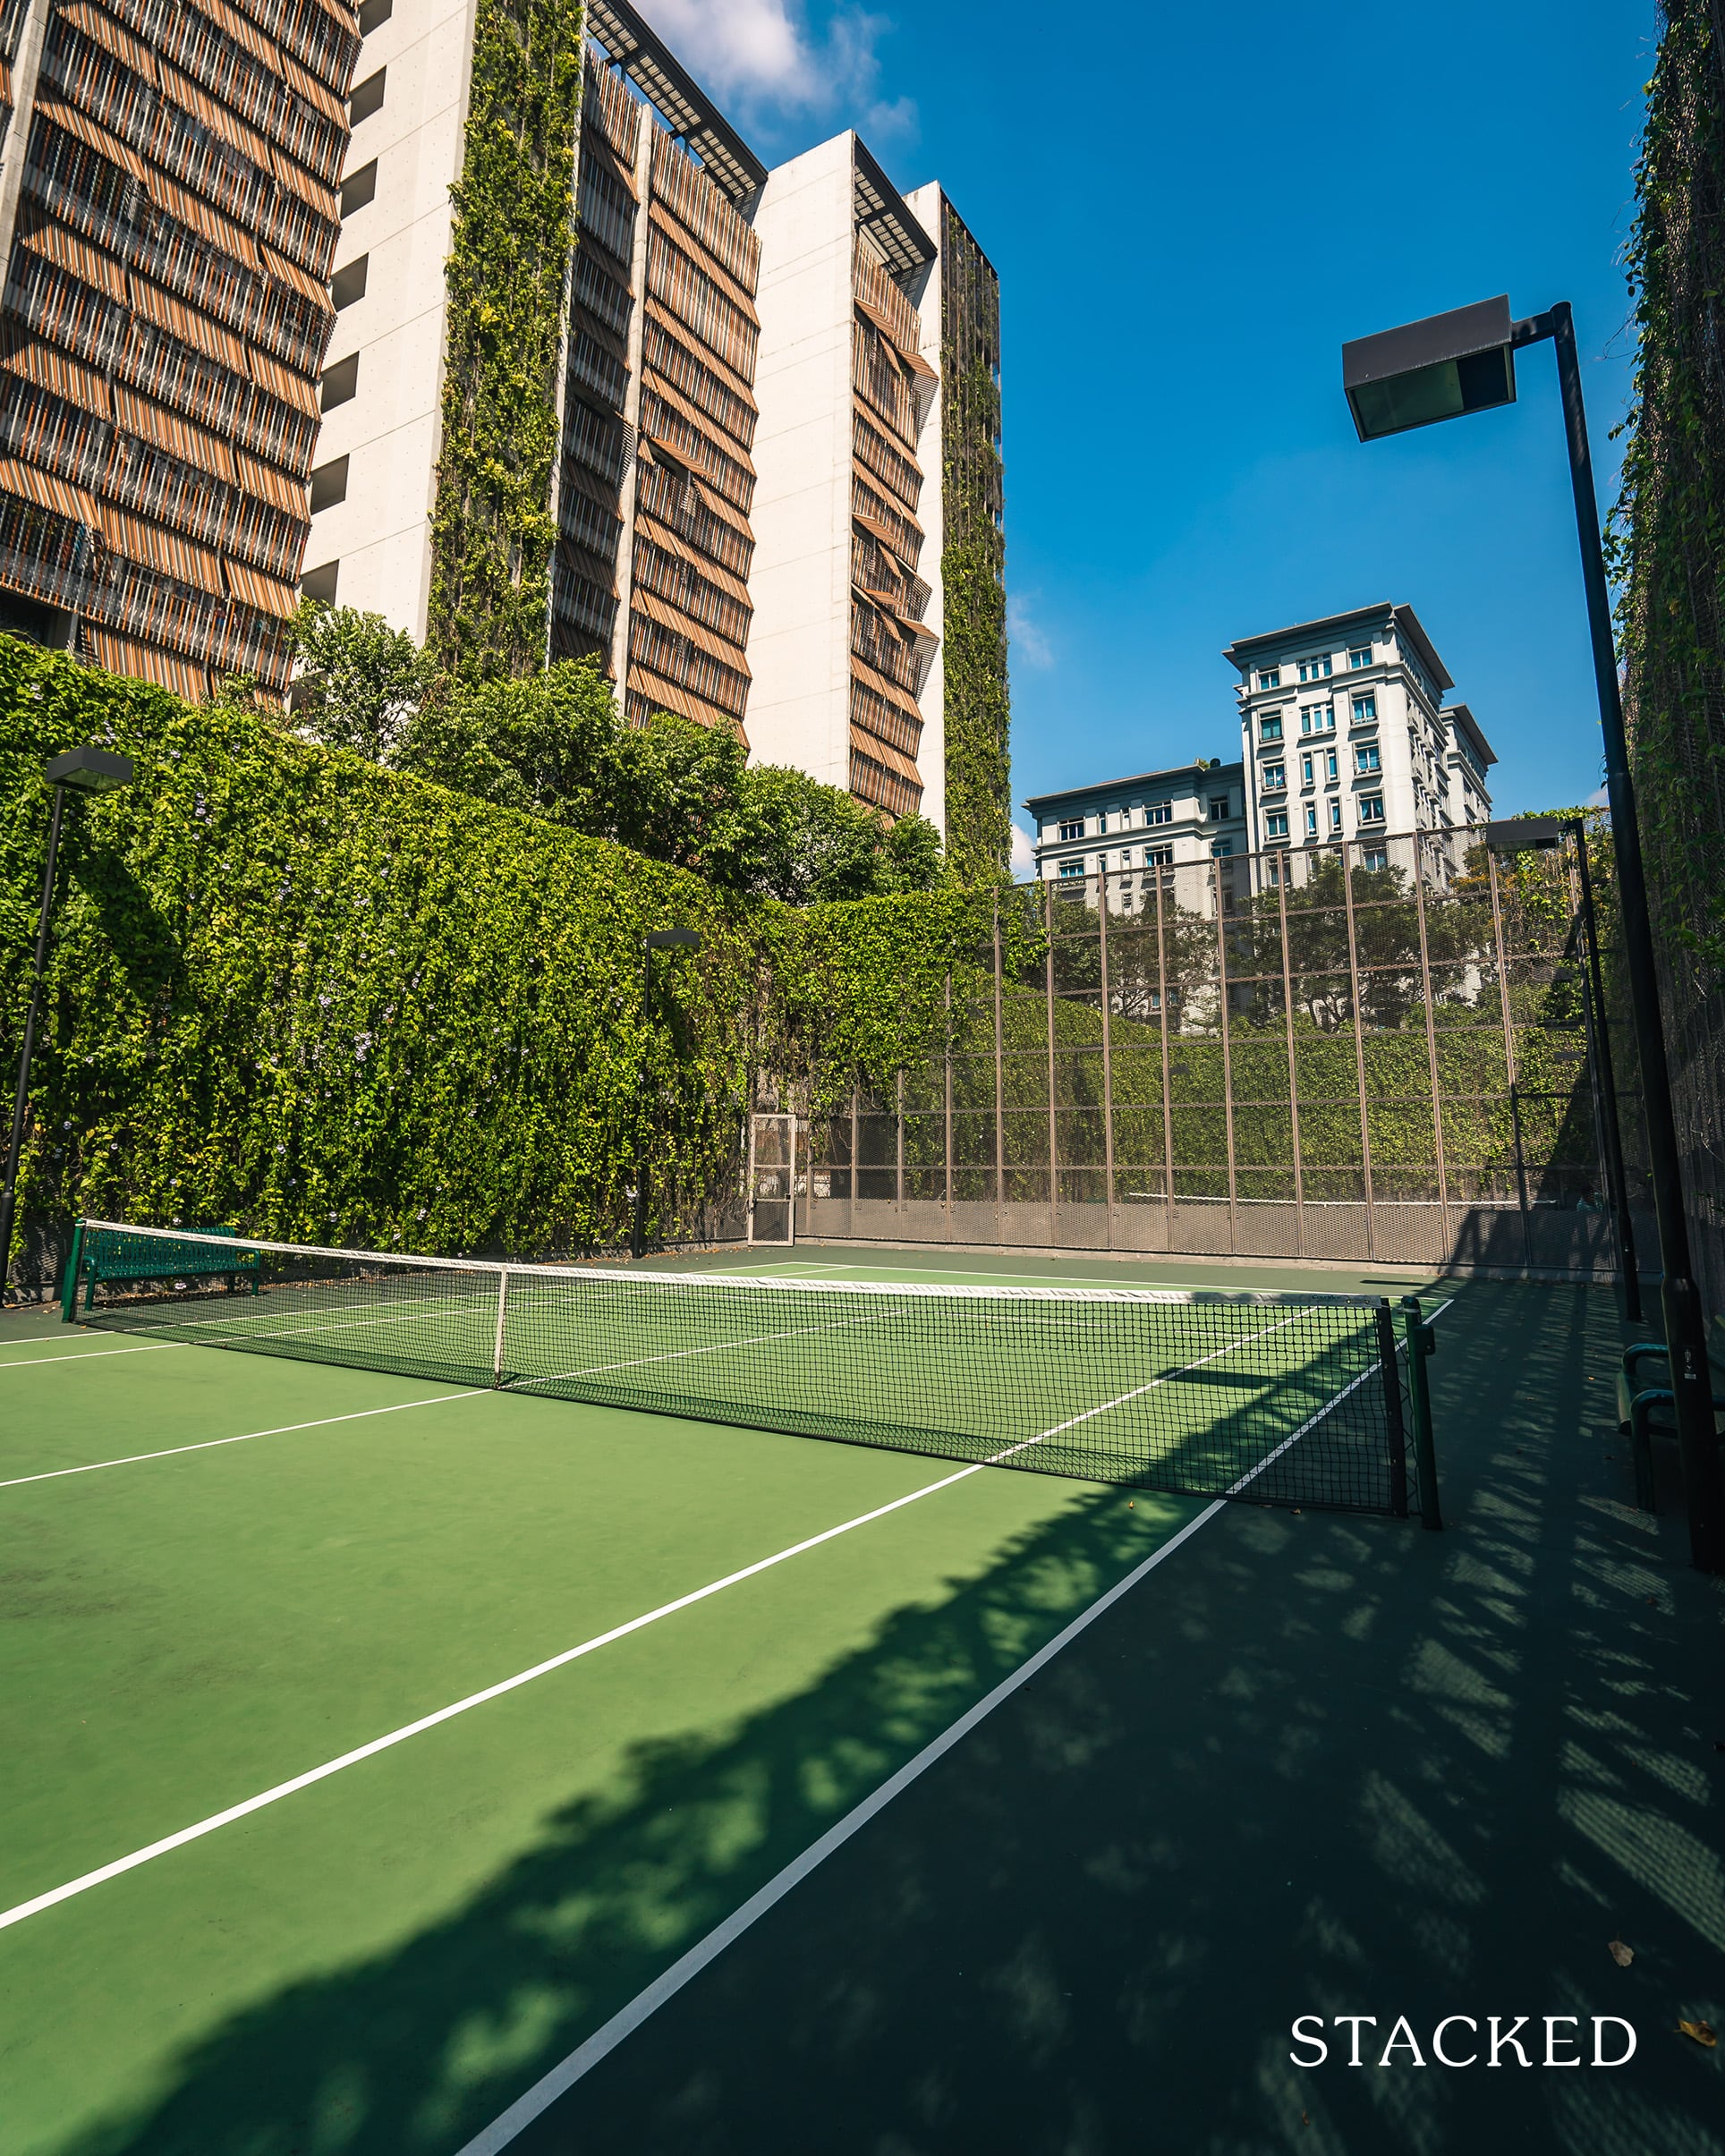 Goodwood Residence tennis court